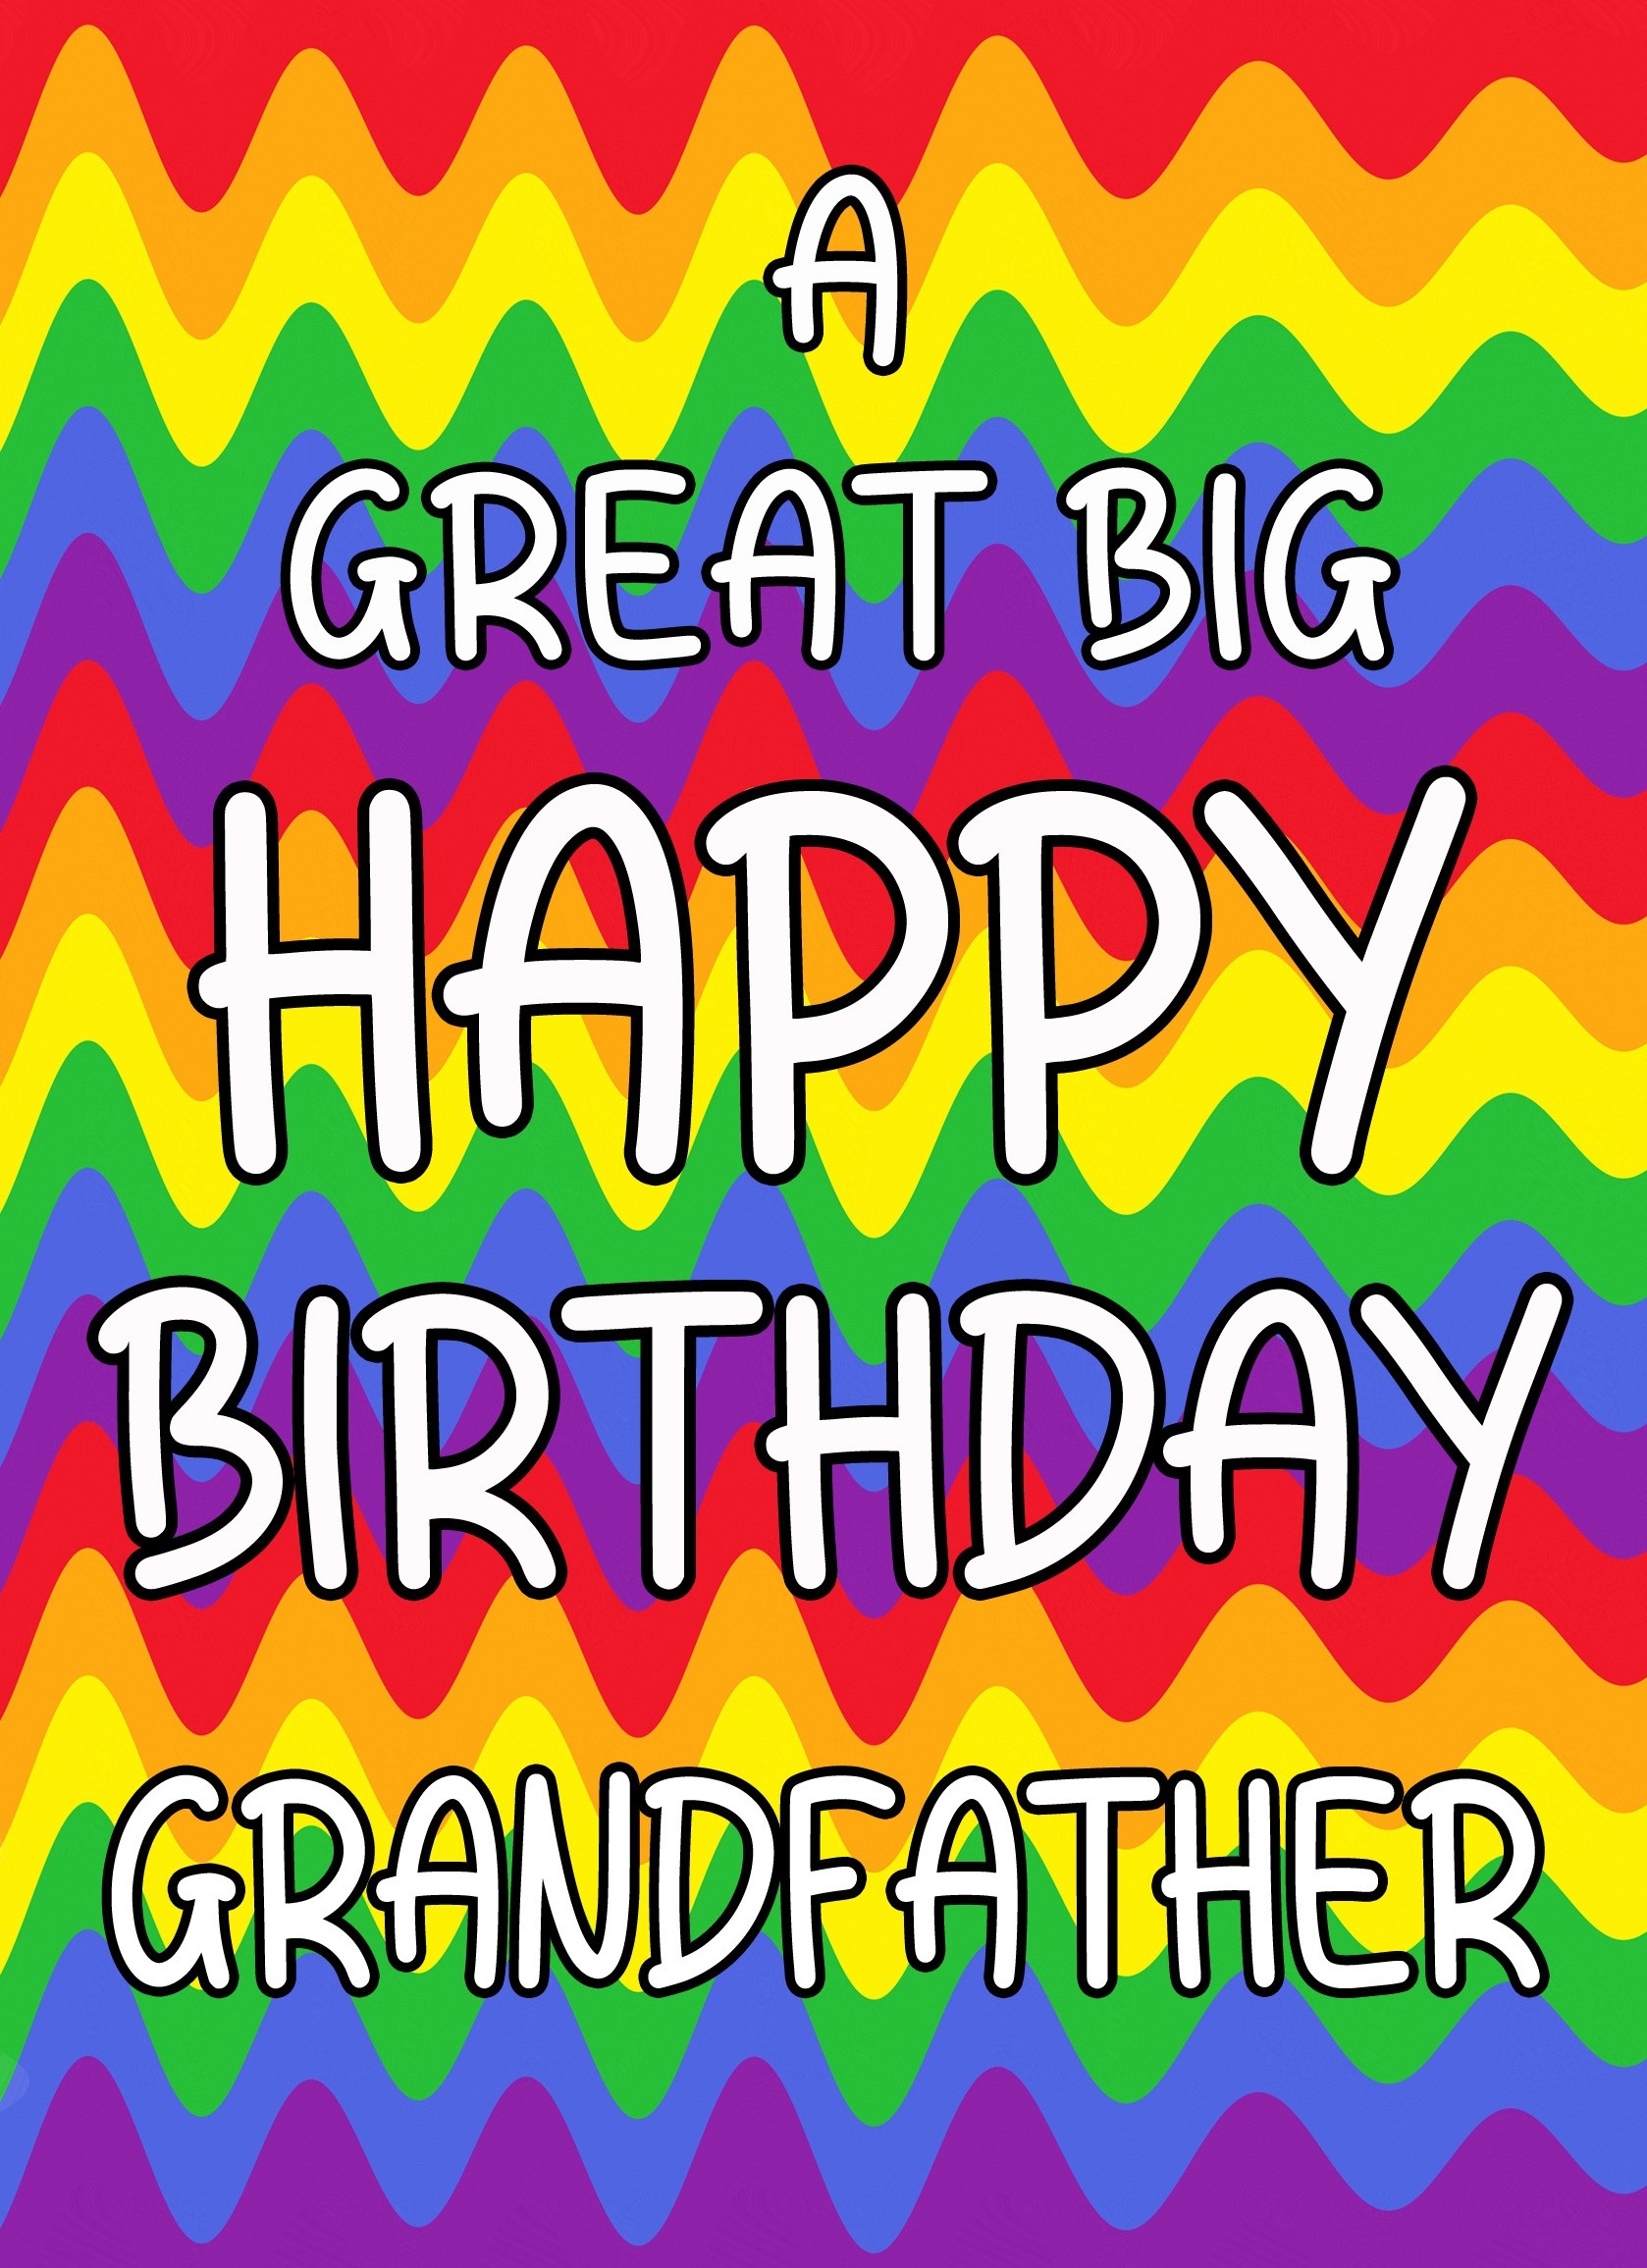 Happy Birthday 'Grandfather' Greeting Card (Rainbow)